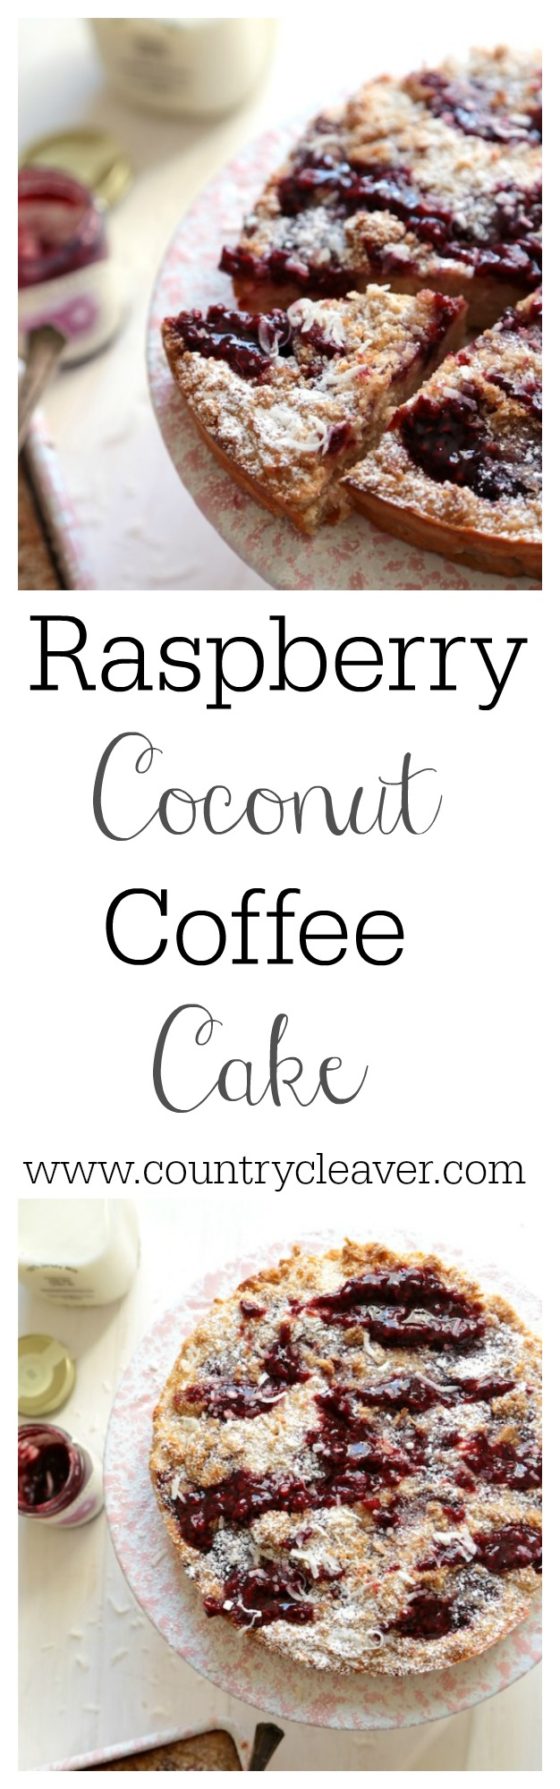 Raspberry Coconut Coffee Cake